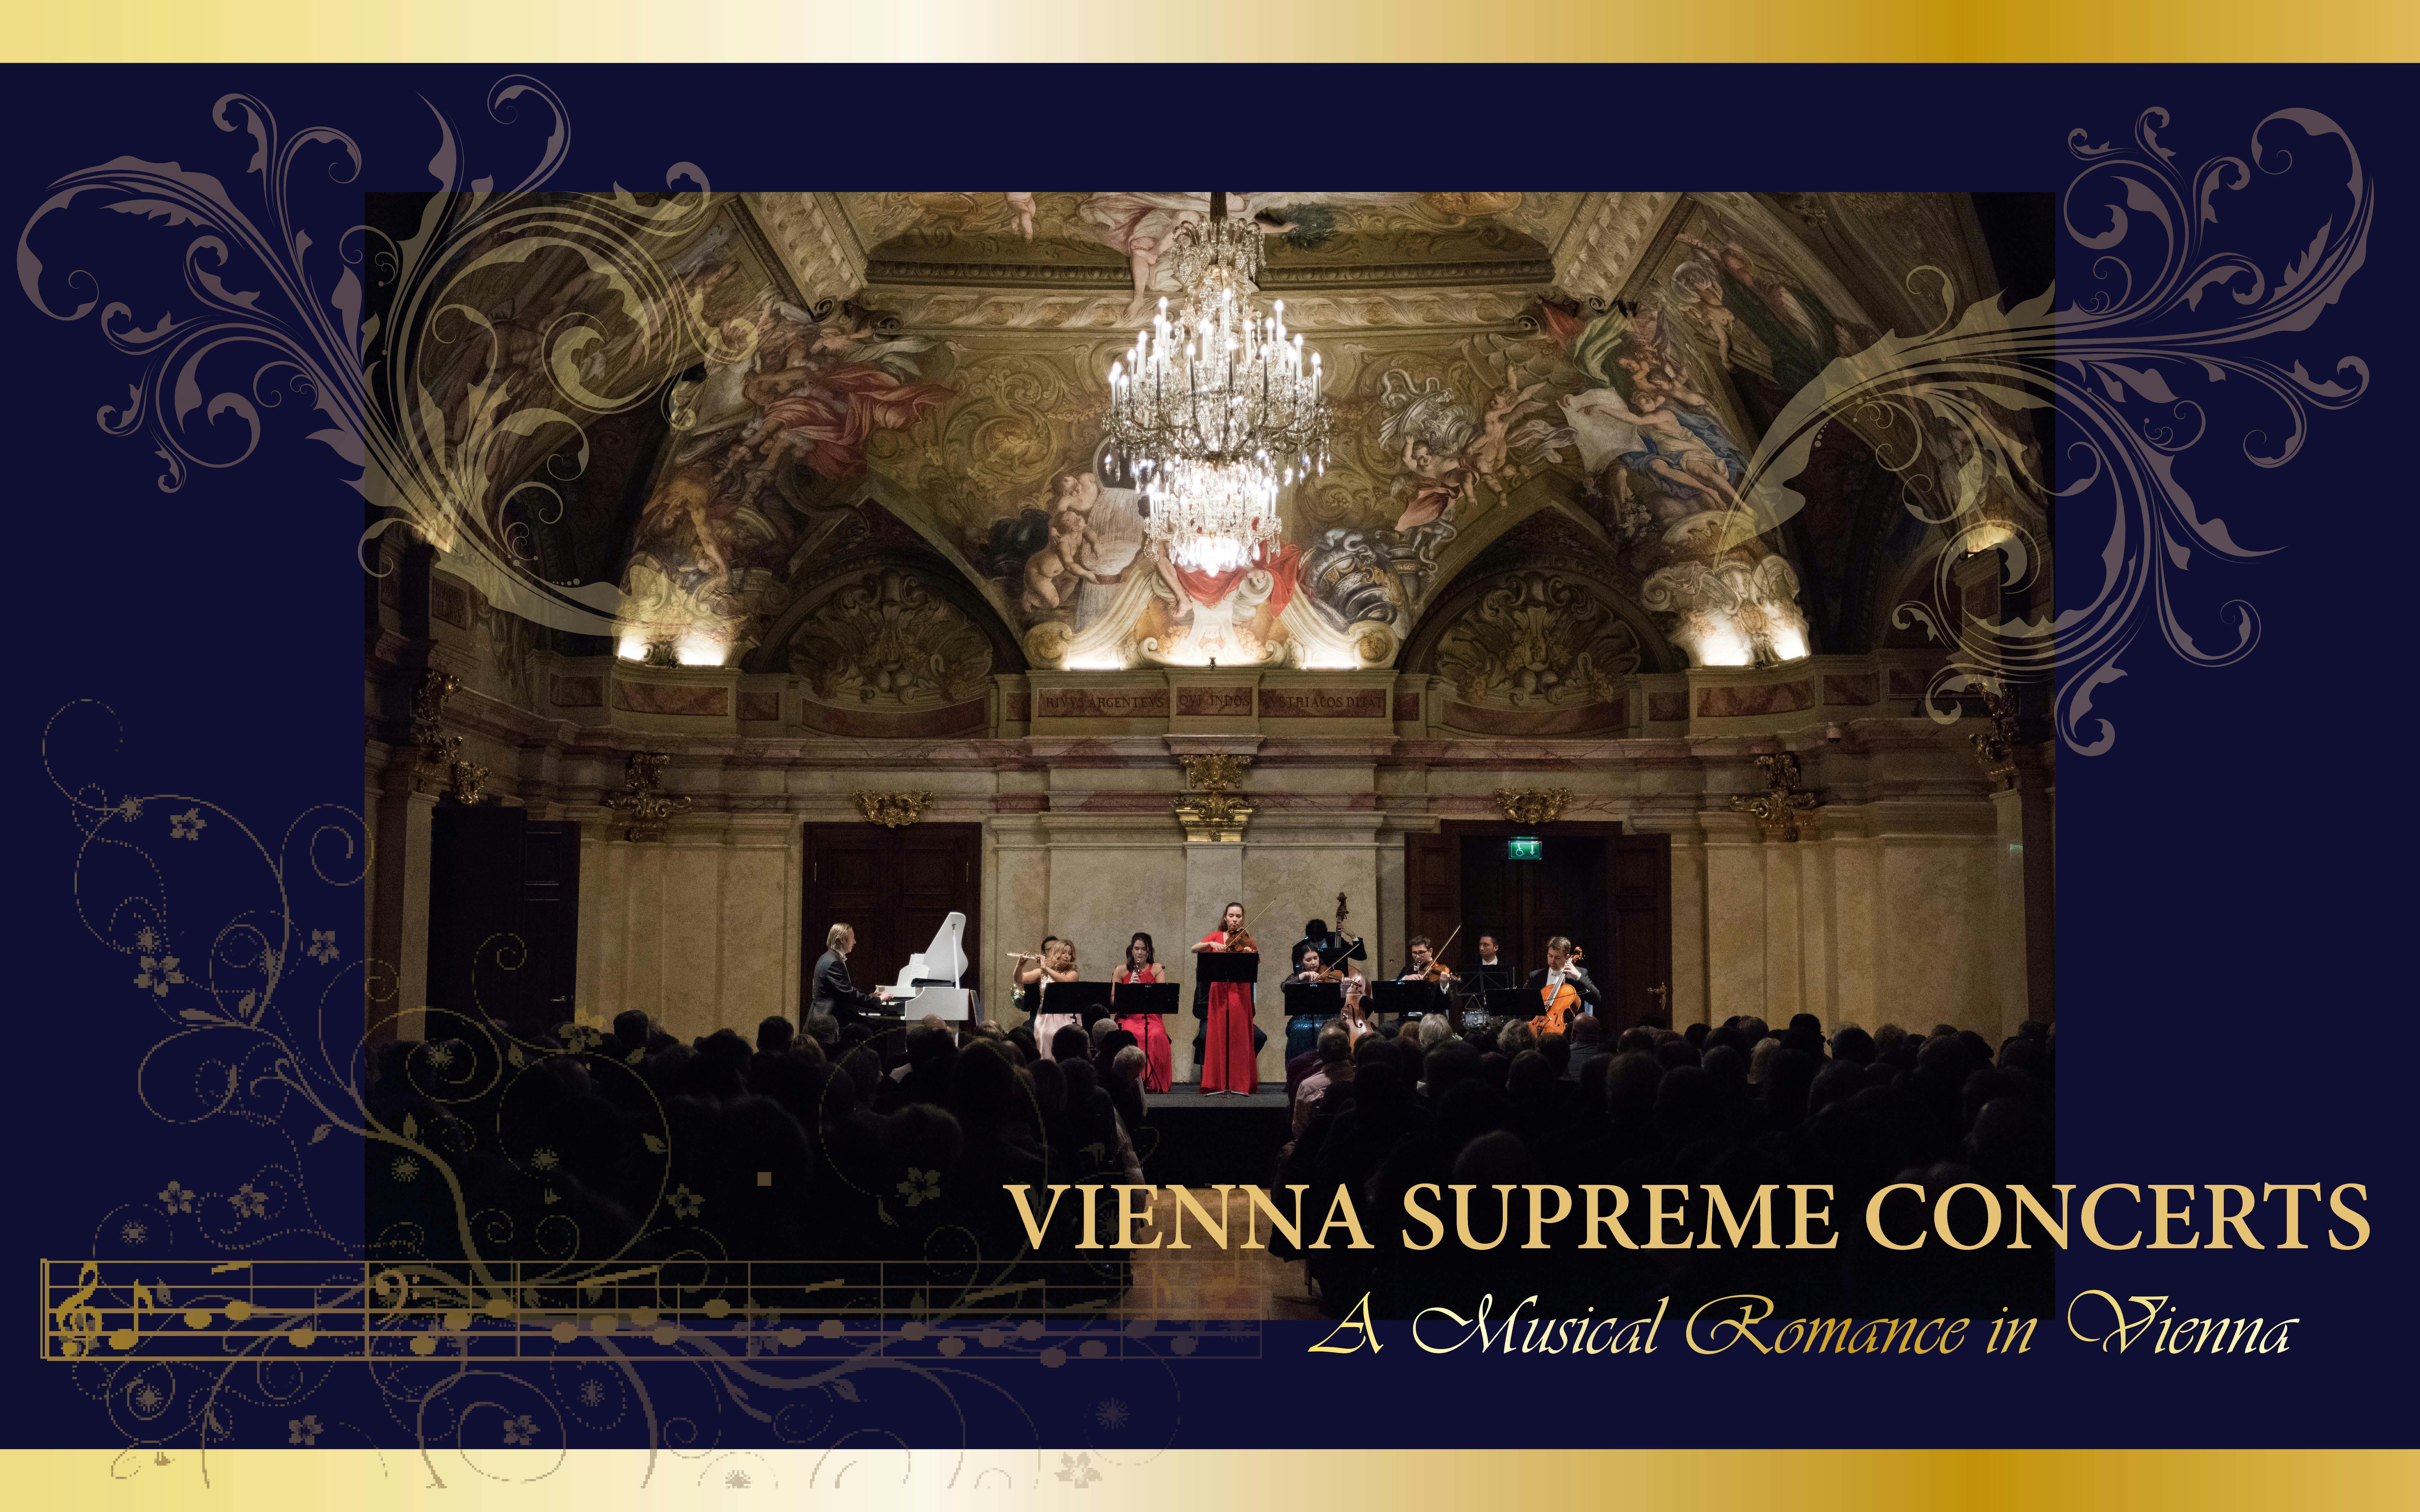 Concertos Supremos de Viena no Palais Eschenbach